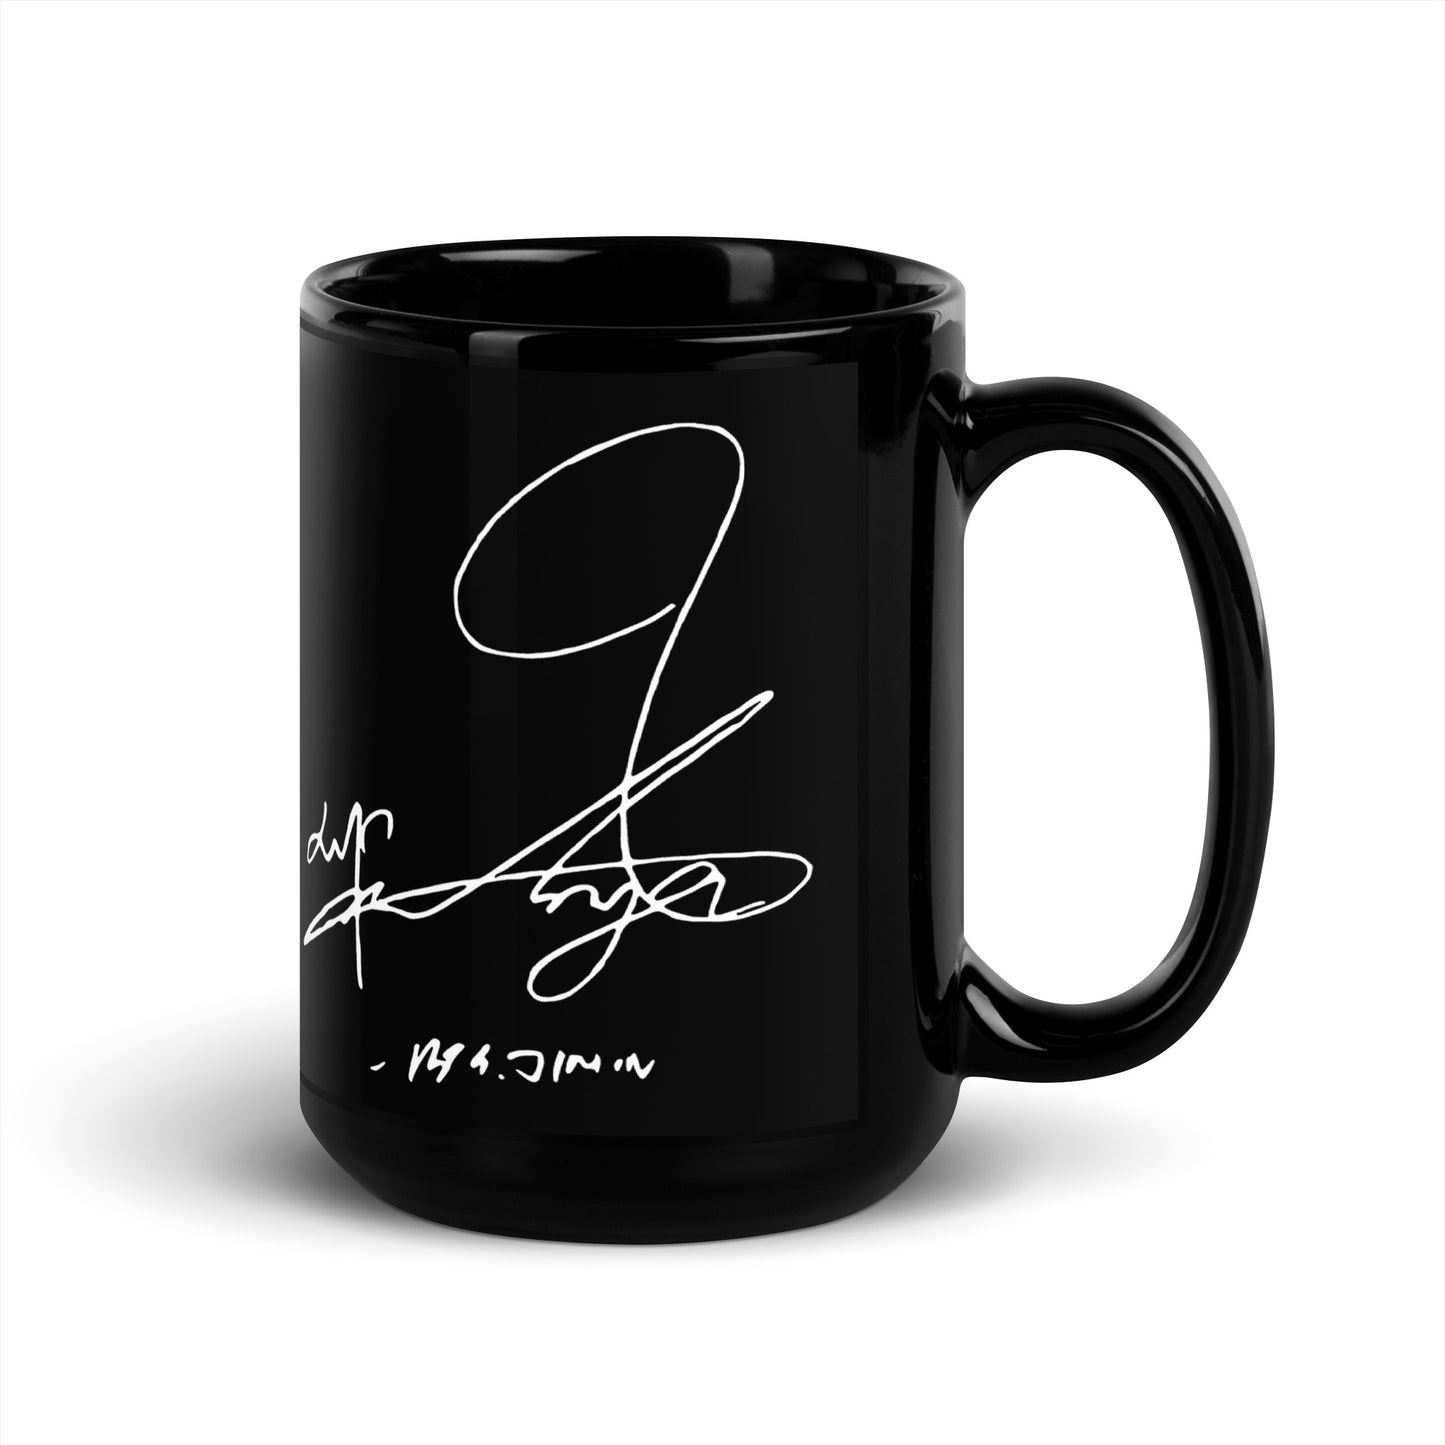 BTS Jimin, Park Ji-min Autograph Ceramic Mug